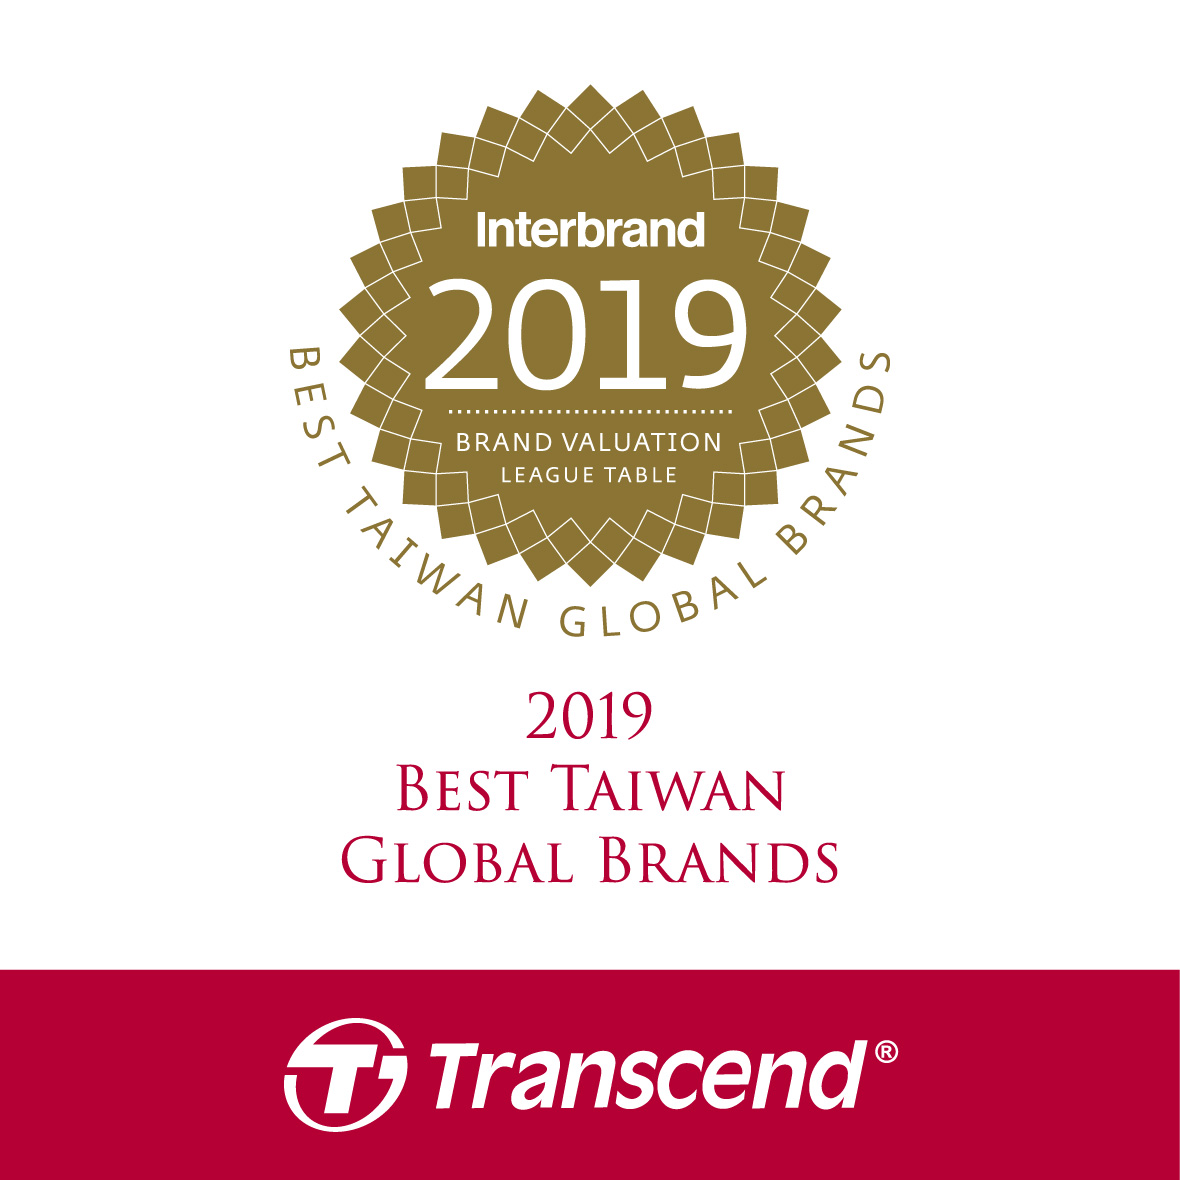 transcend 2019 best taiwan global brand ทรานส์เซนด์ ขึ้นทำเนียบ Taiwan Global Brand เป็นปีที่ 13 ติดต่อกัน ตอกย้ำการเป็นแบรนด์และผลิตภัณฑ์ระดับโลก